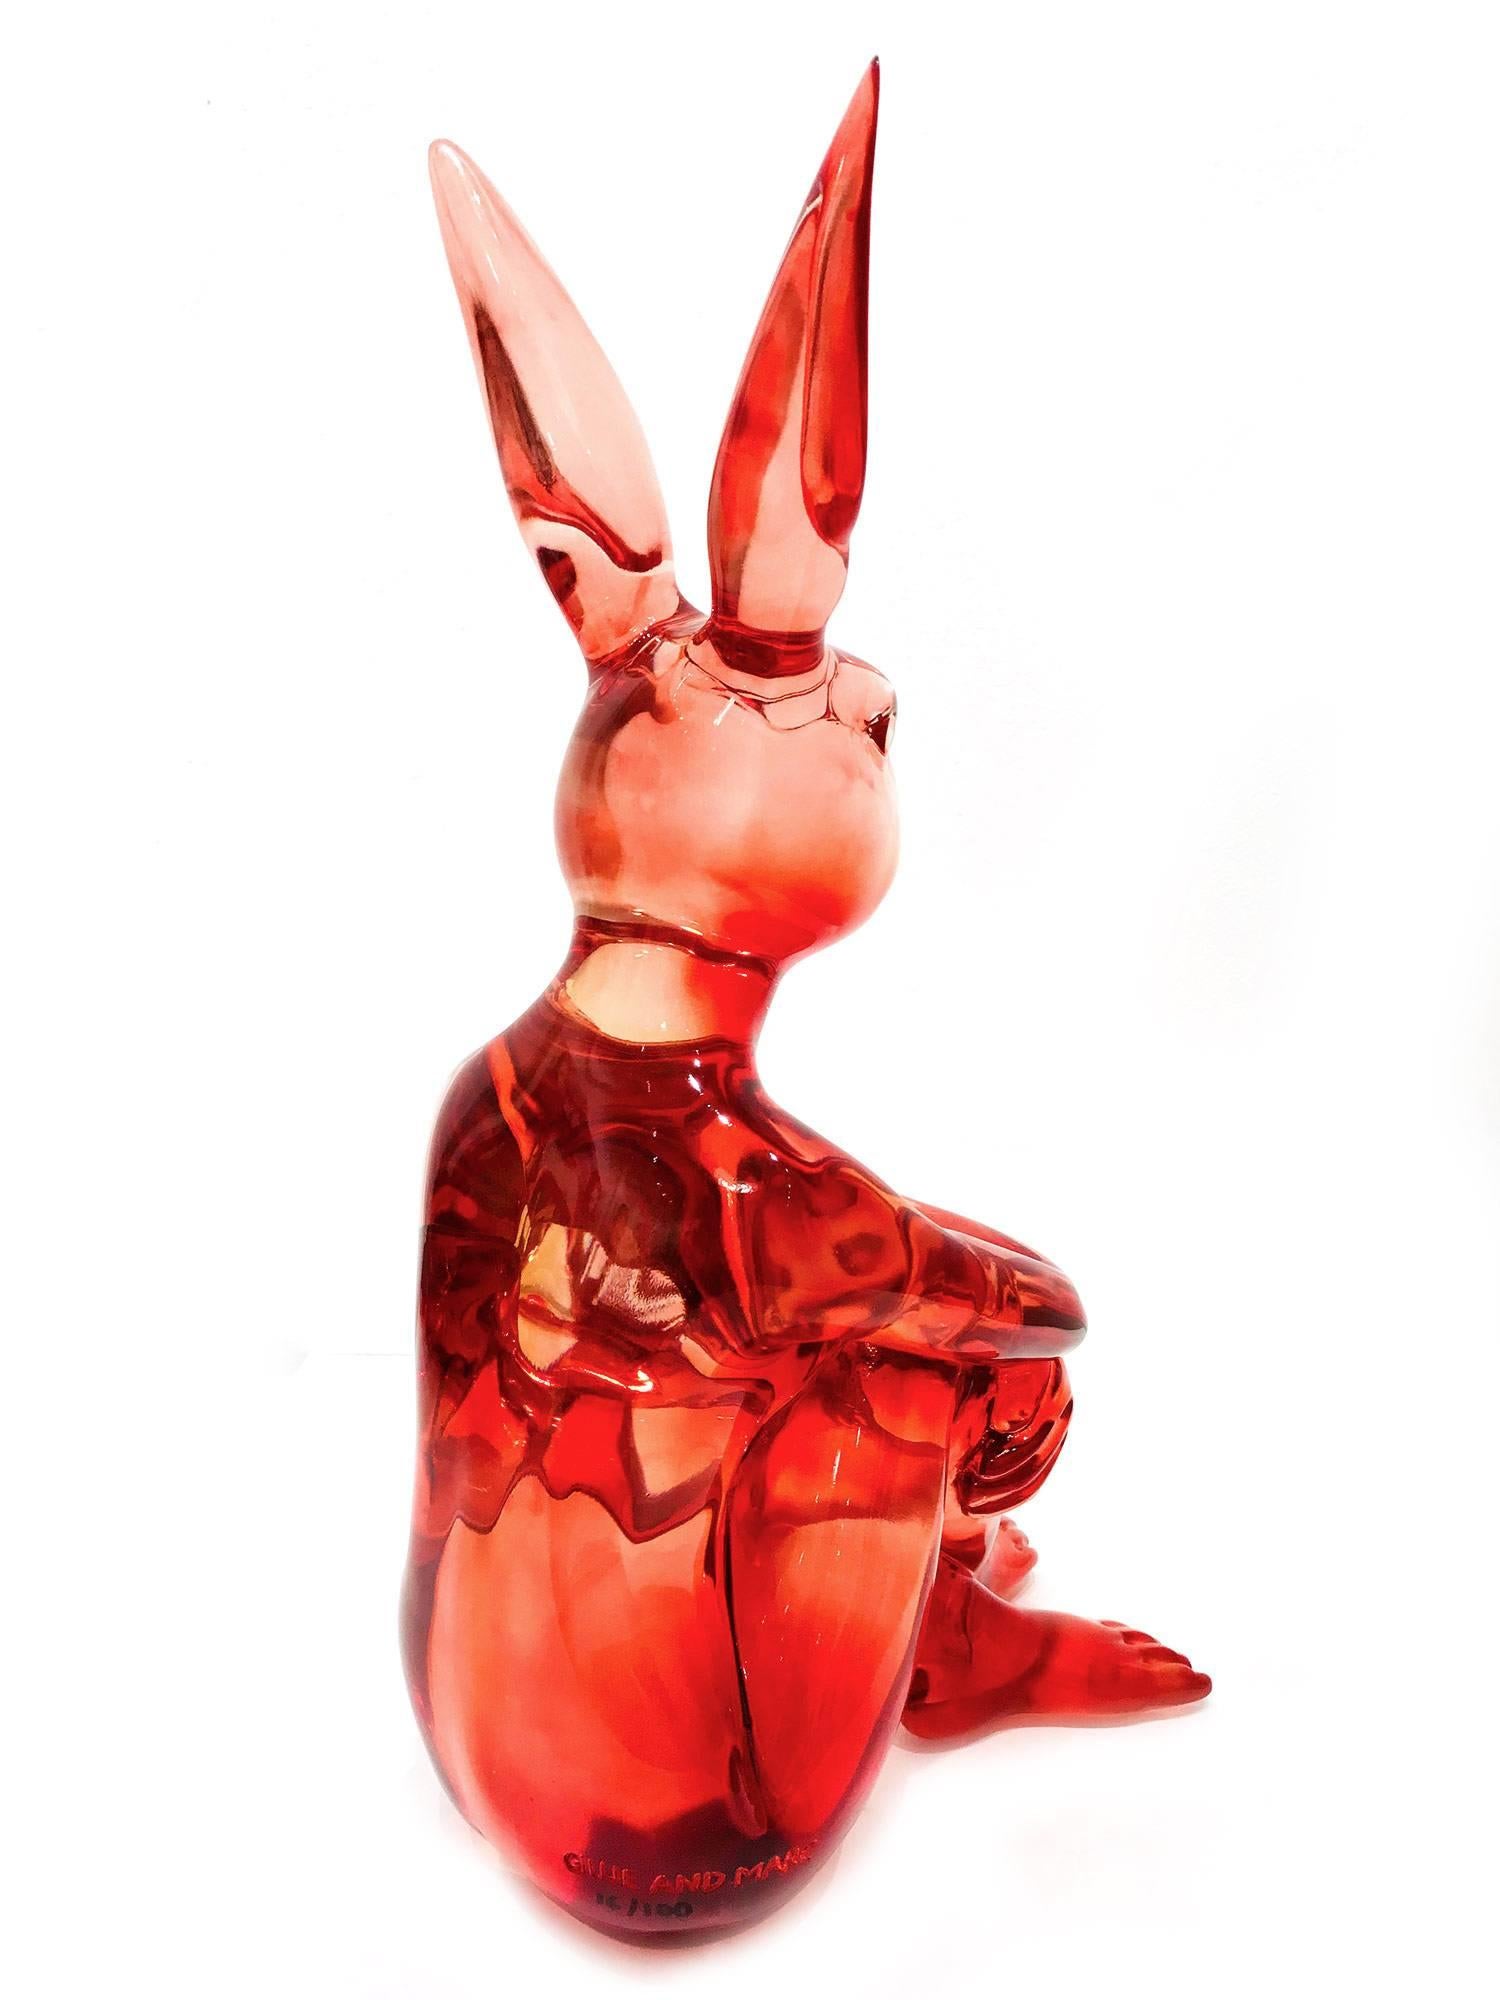 Raspberry Swirl Rabbit Girl - Red Figurative Sculpture by Gillie and Marc Schattner